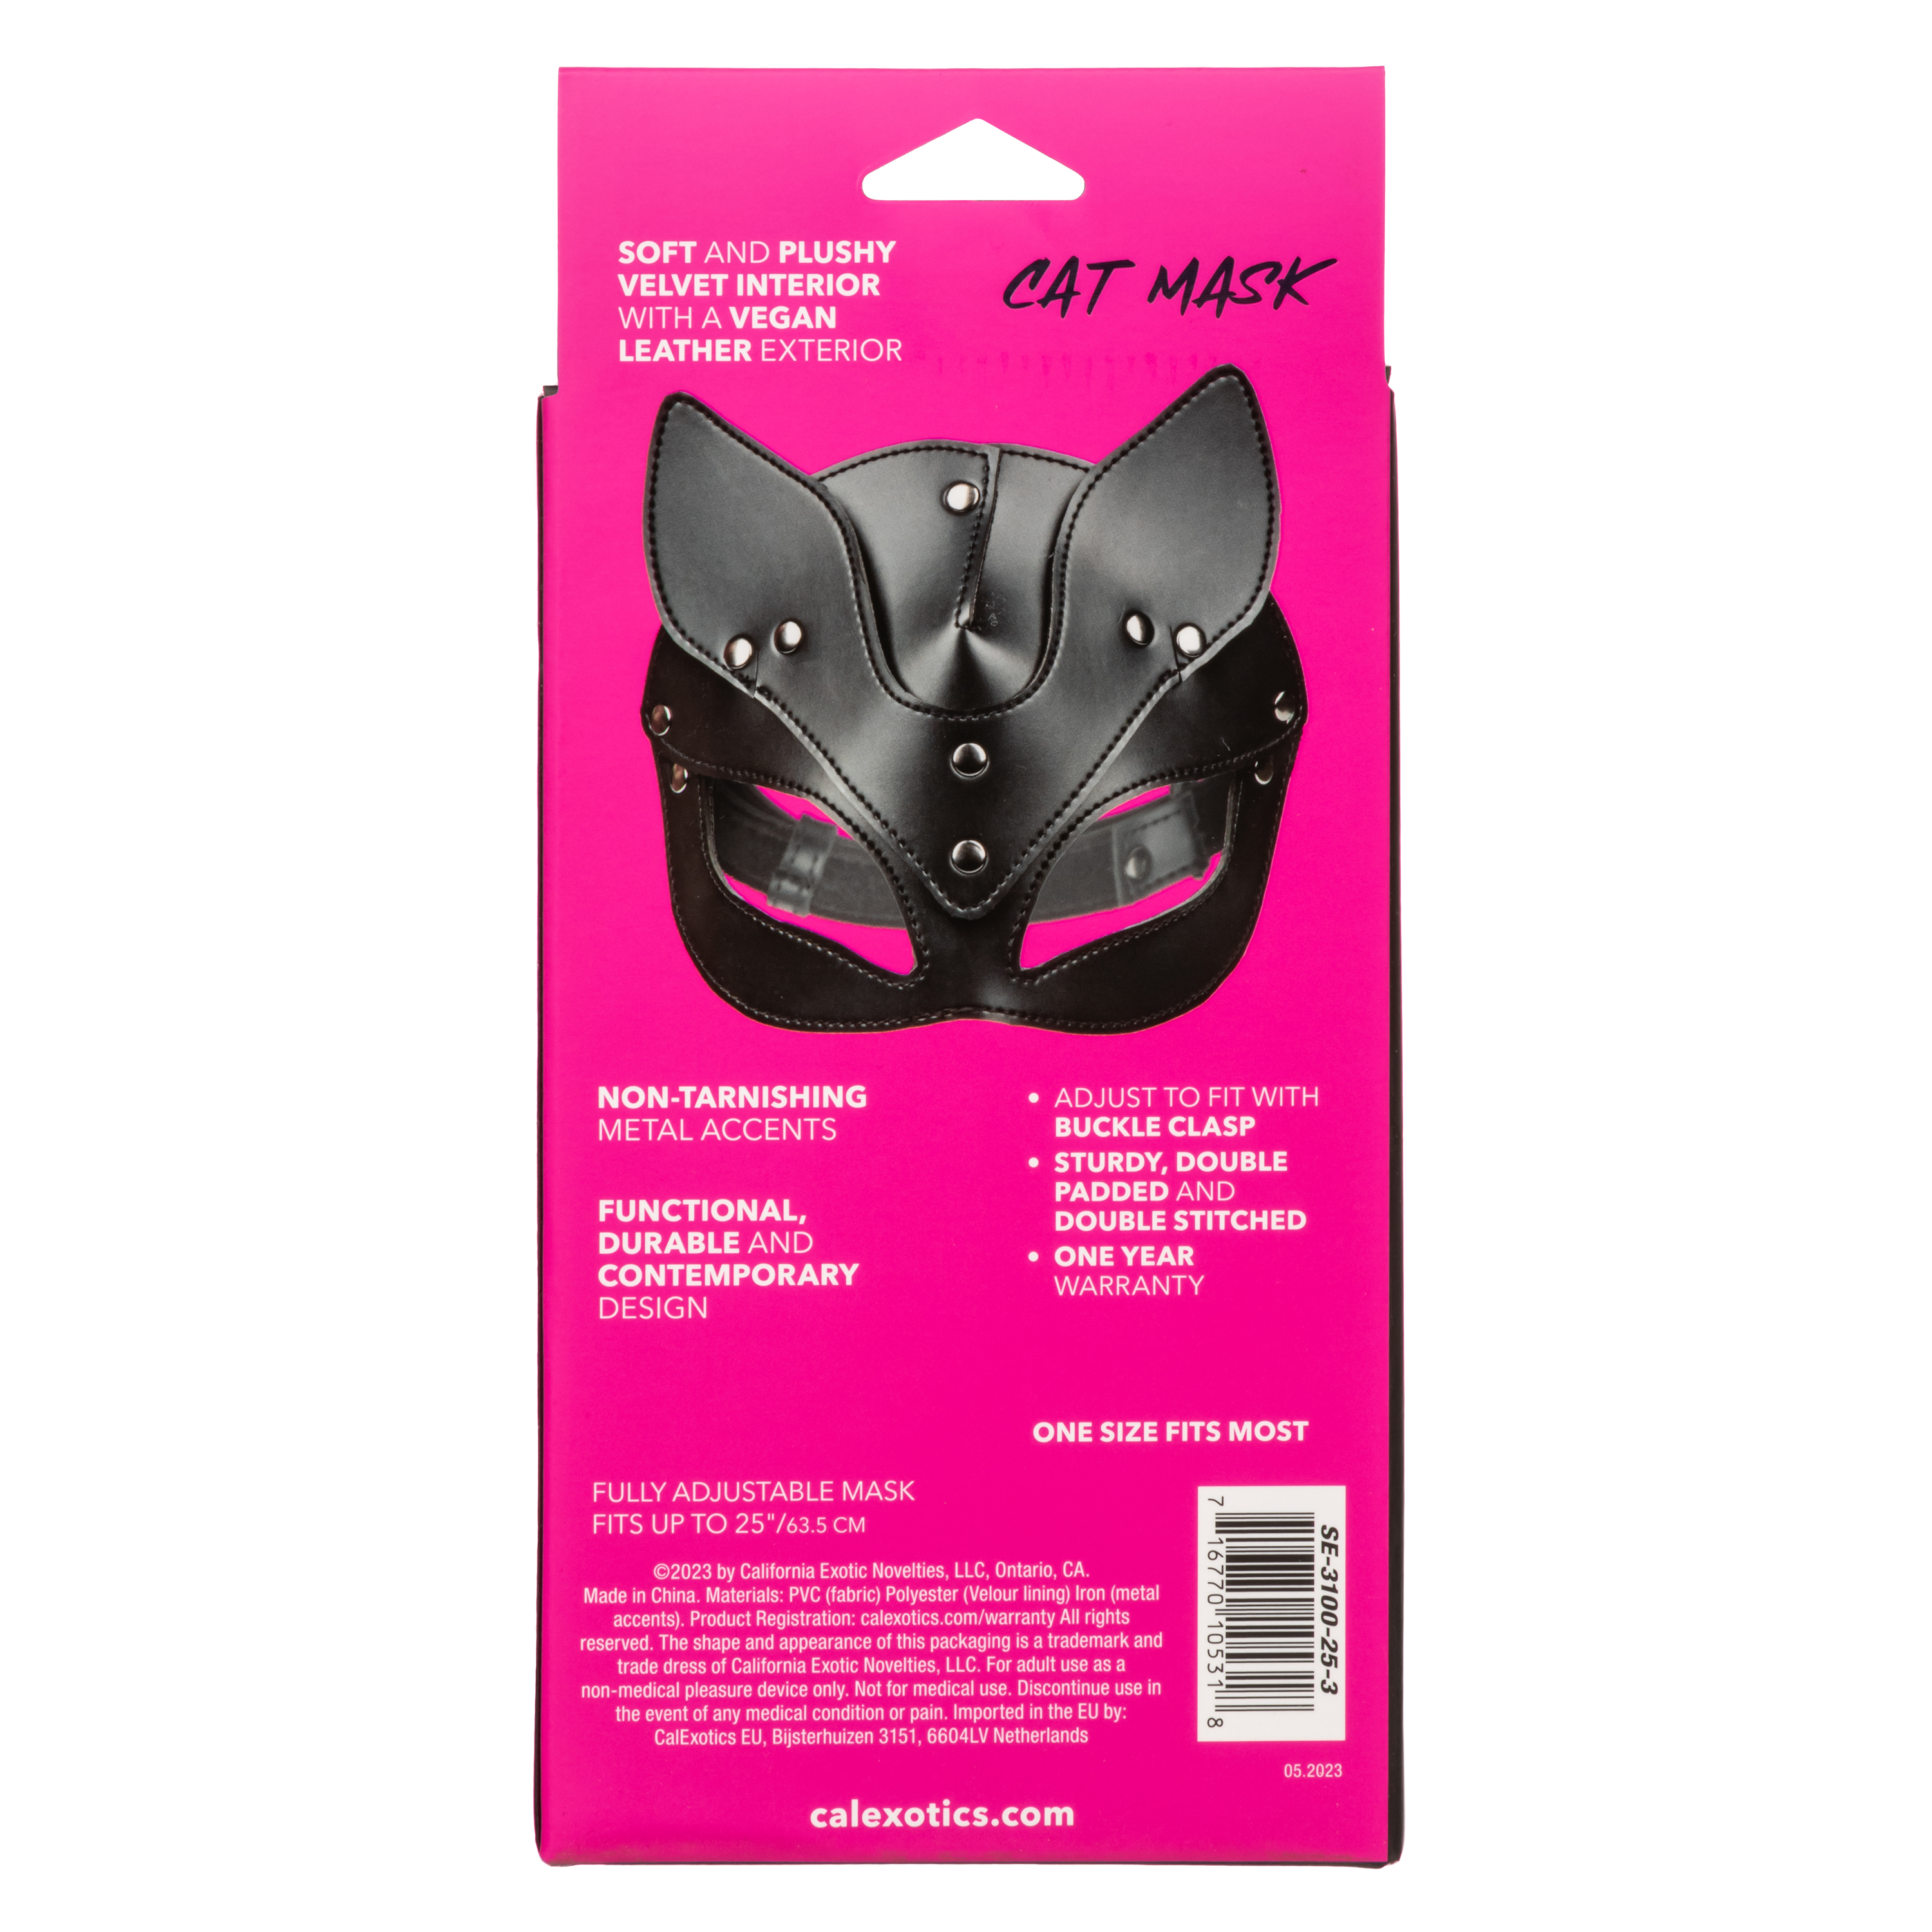 euphoria collection cat mask black 